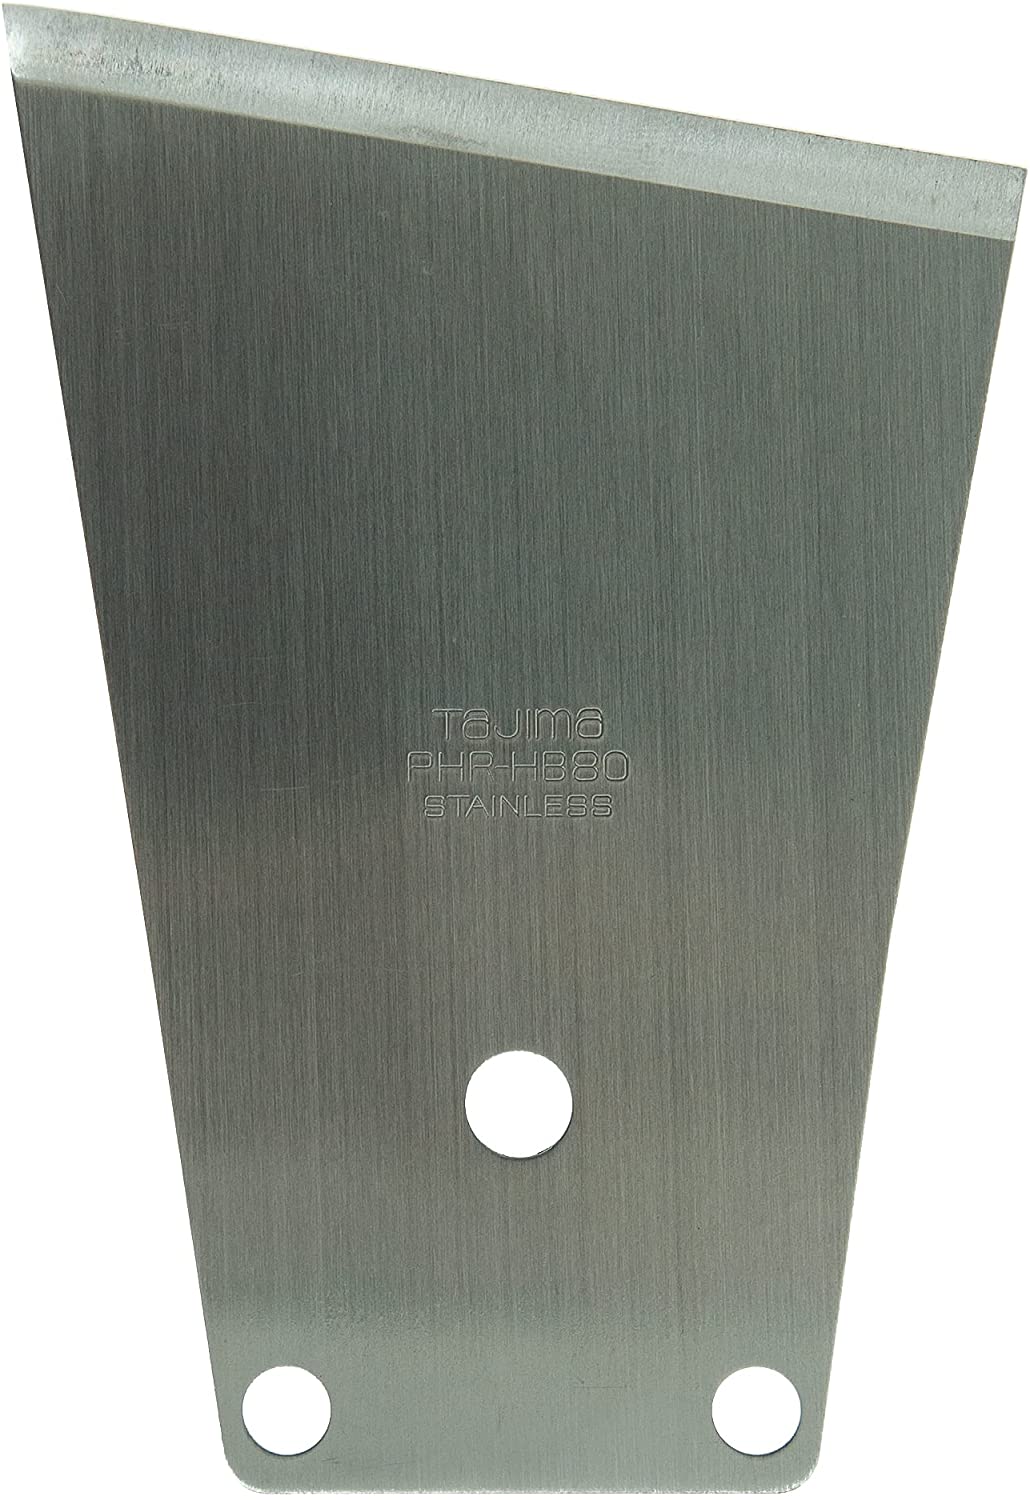 TAJIMA Replacement Blade Hard Slanted for PHR250H80/500H80